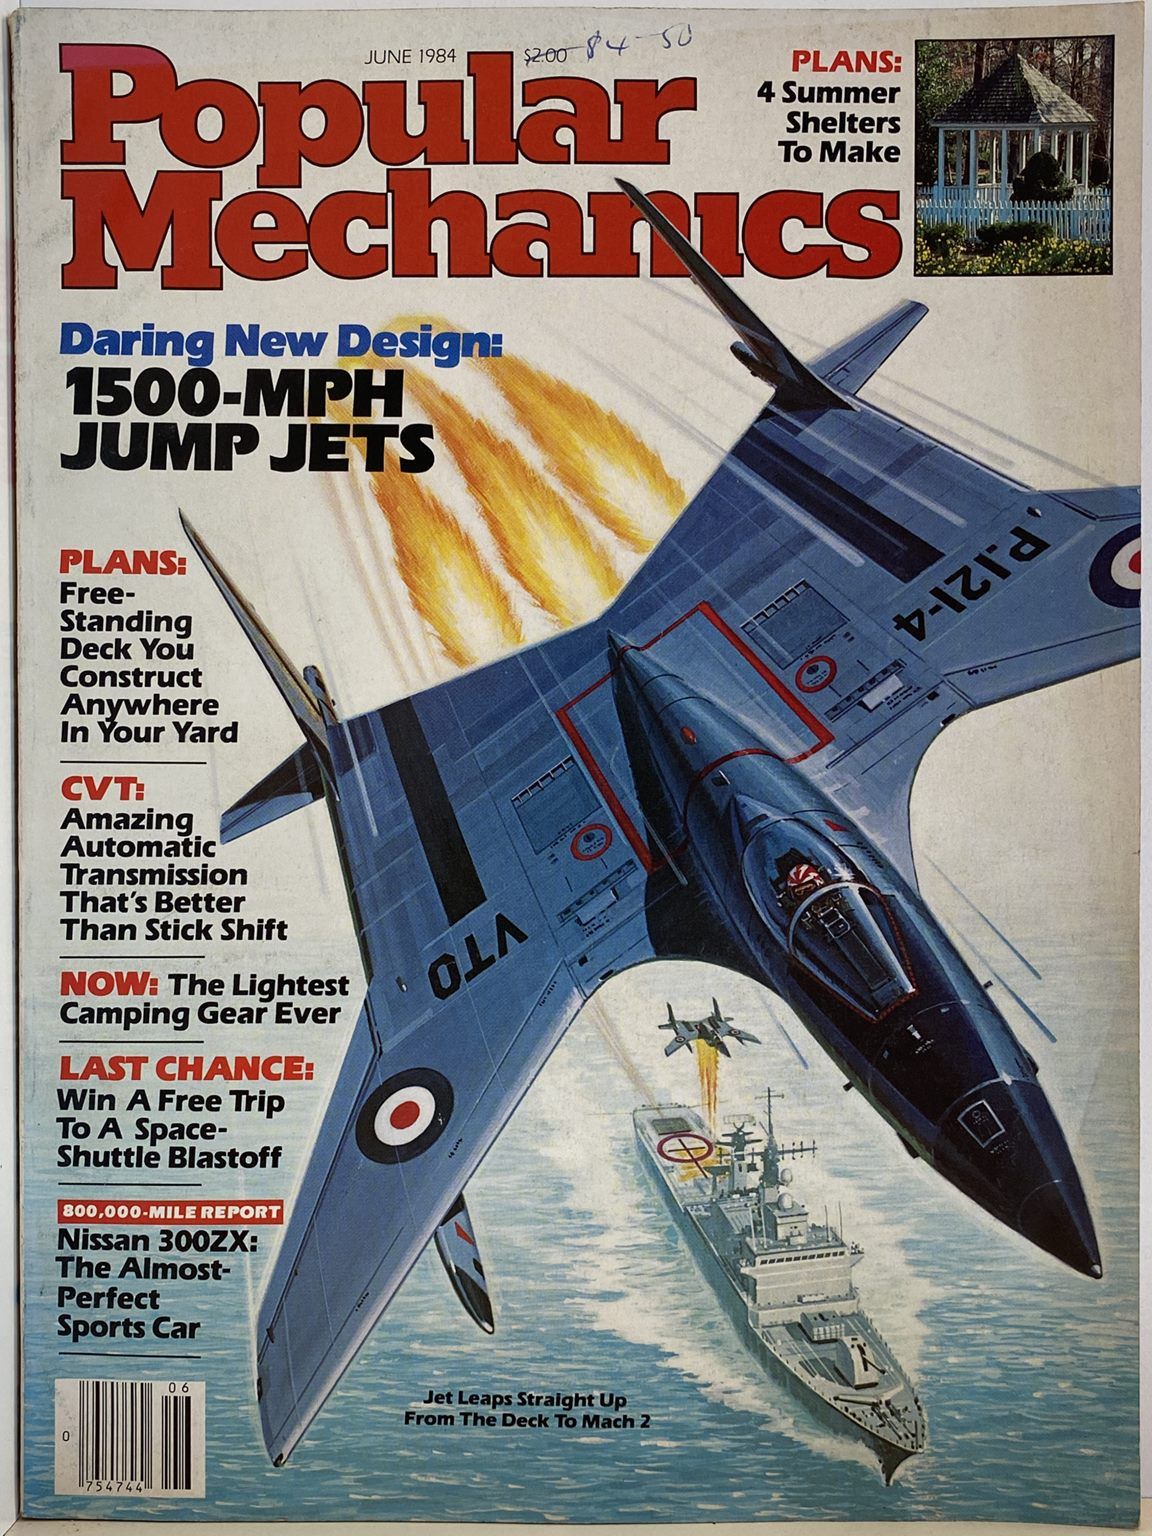 VINTAGE MAGAZINE: Popular Mechanics - Vol. 161, No. 6 - June 1984